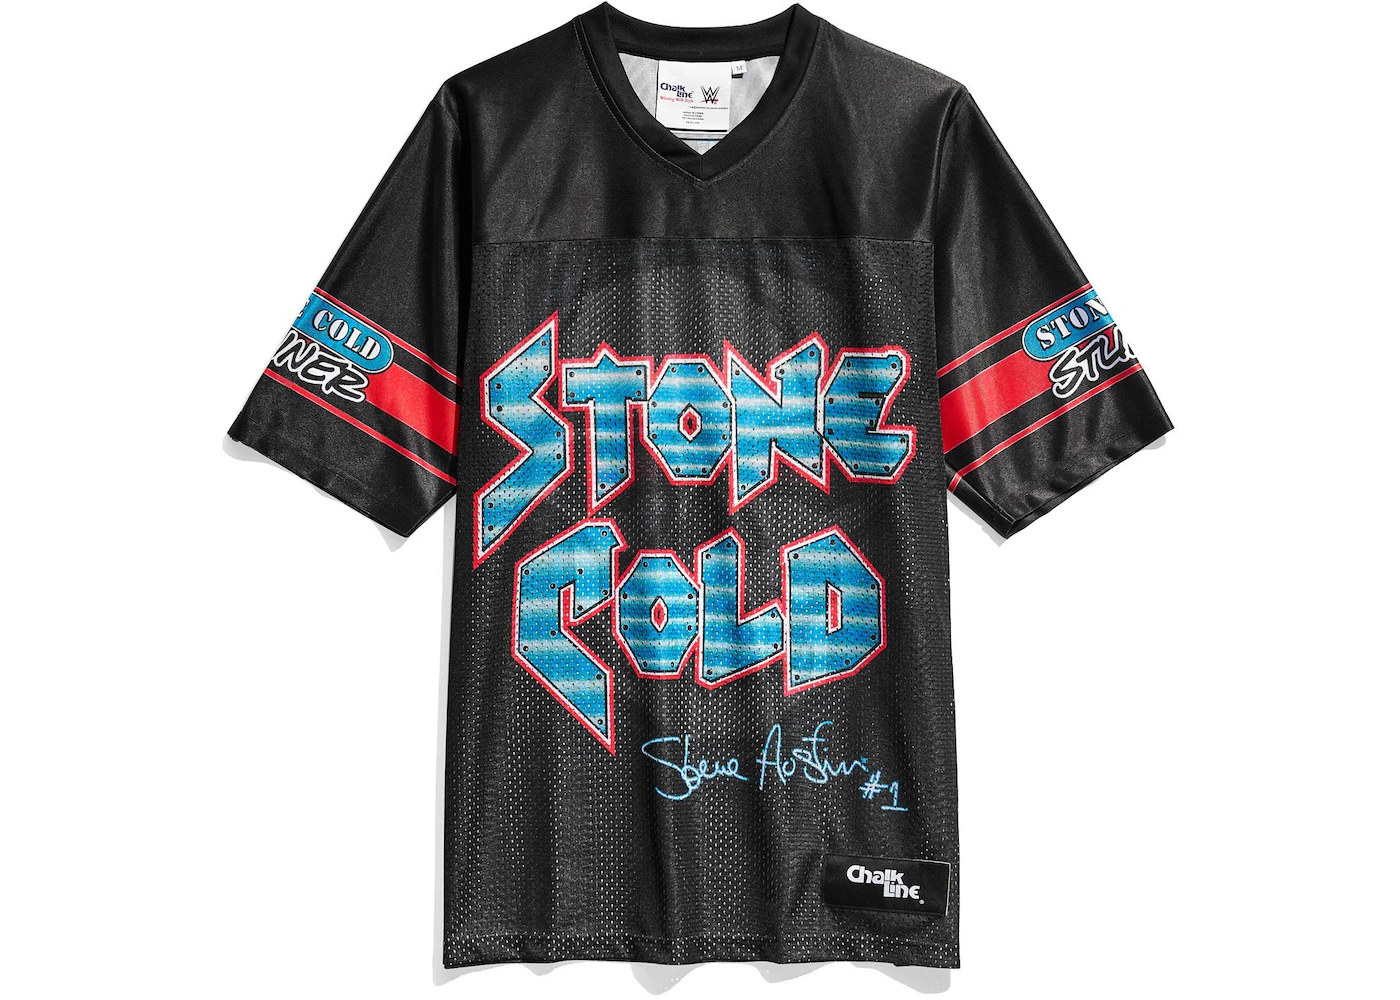 Stone Cold Steve Austin Football Jersey, Pro Wrestling